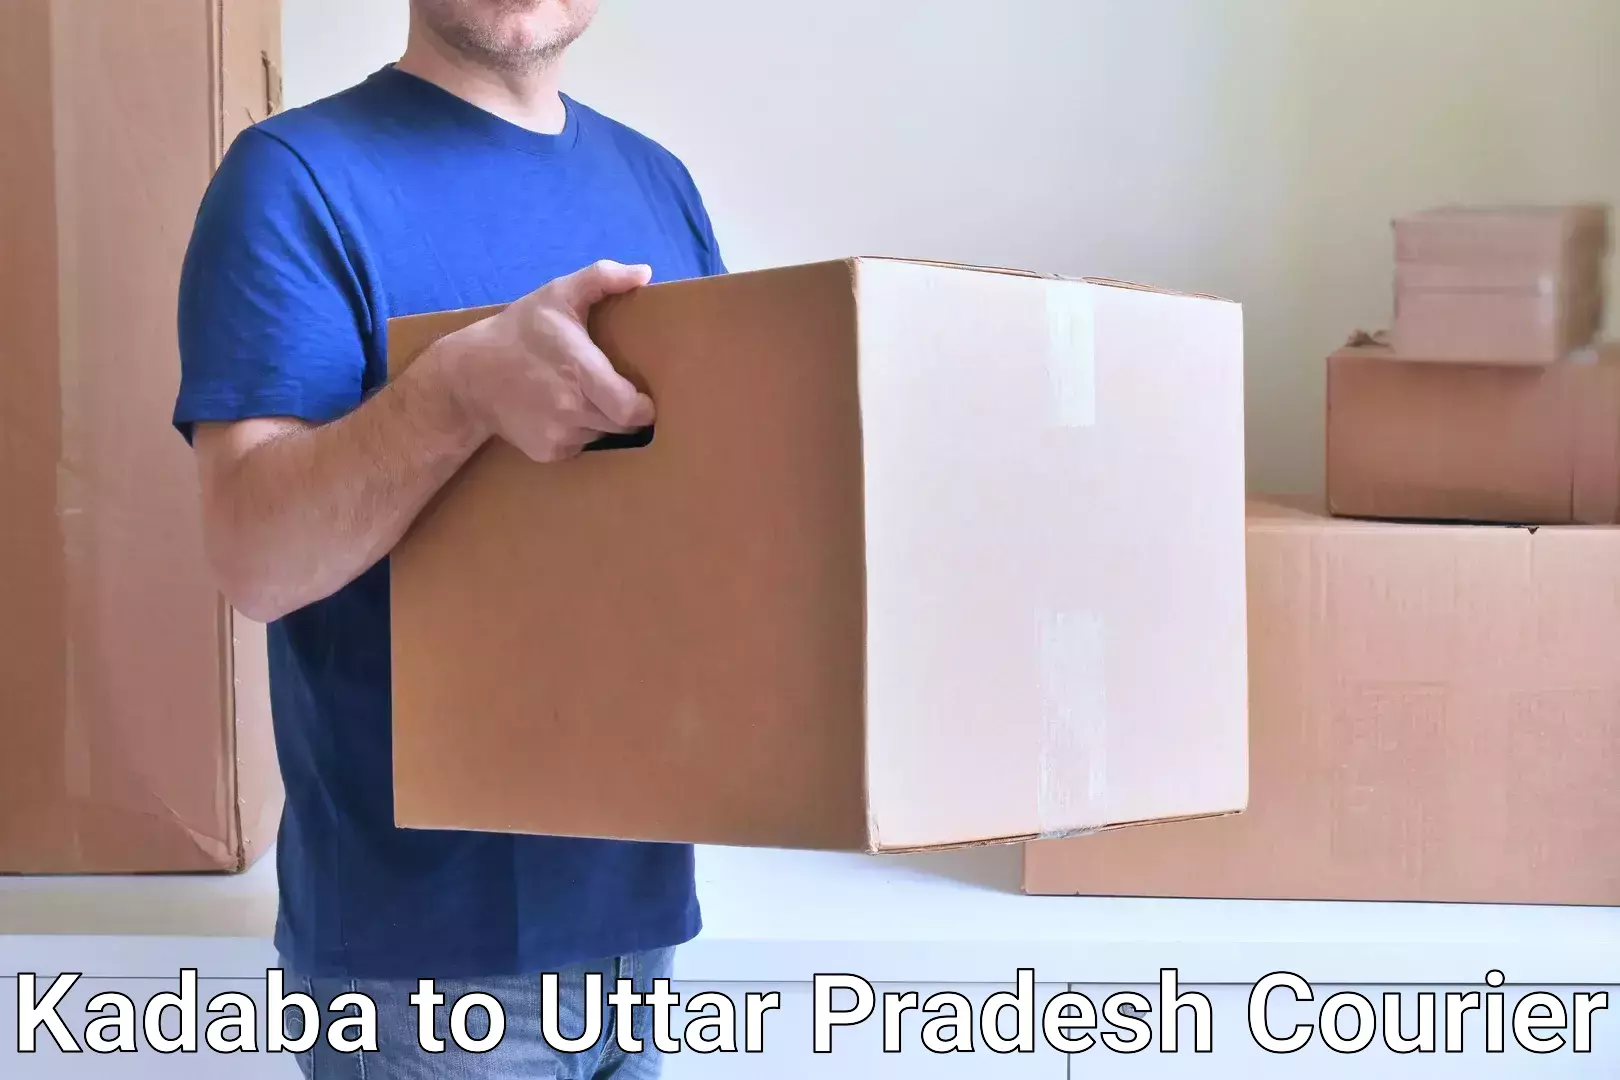 Efficient parcel tracking Kadaba to Aligarh Muslim University